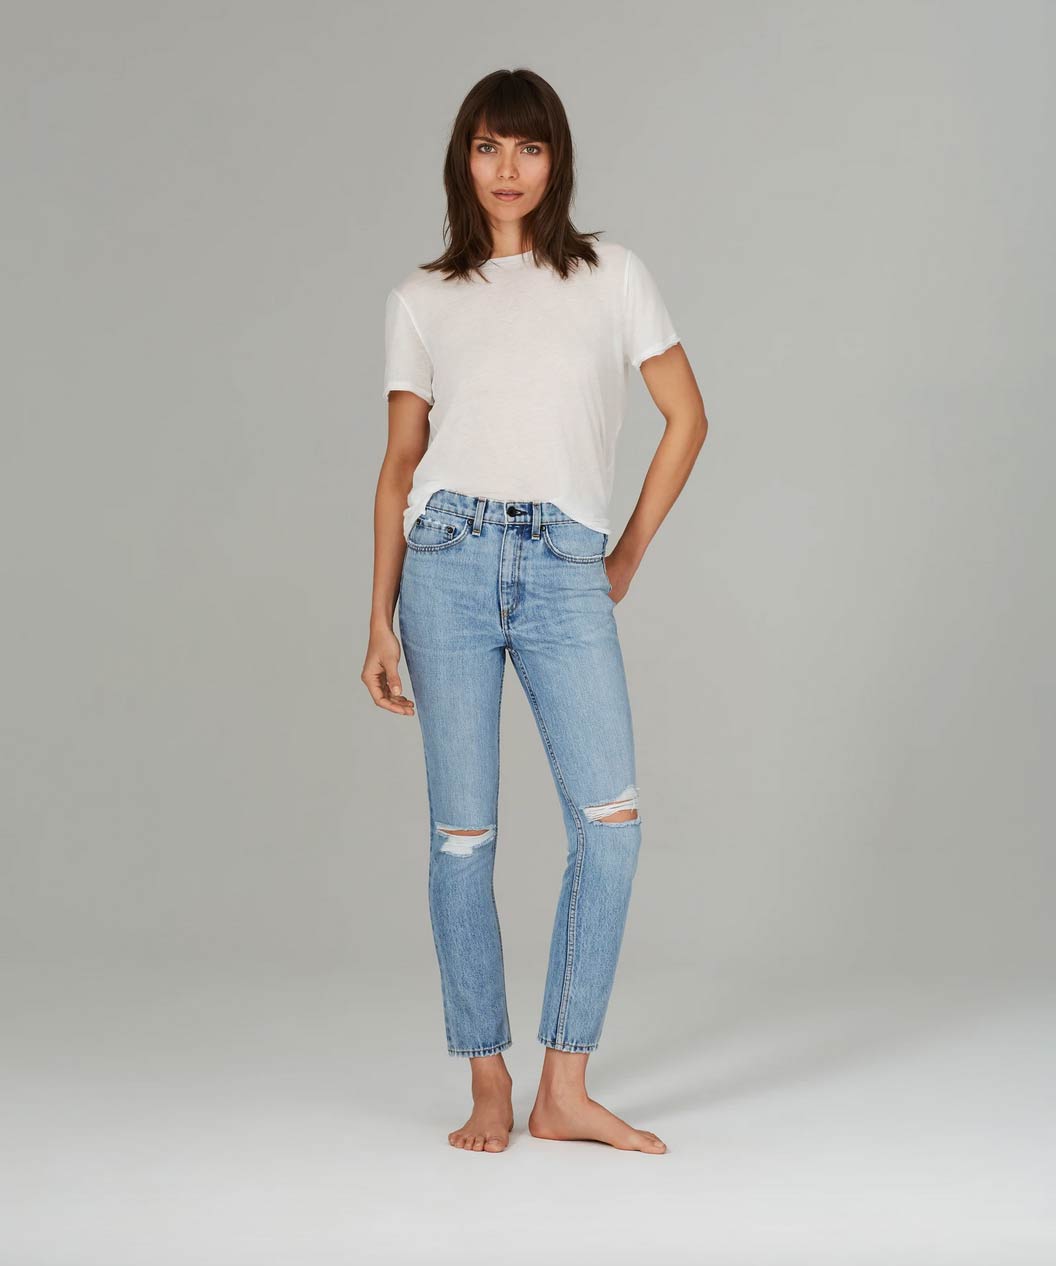 ASKK Denim – New Core Jeans - THE JEANS BLOG